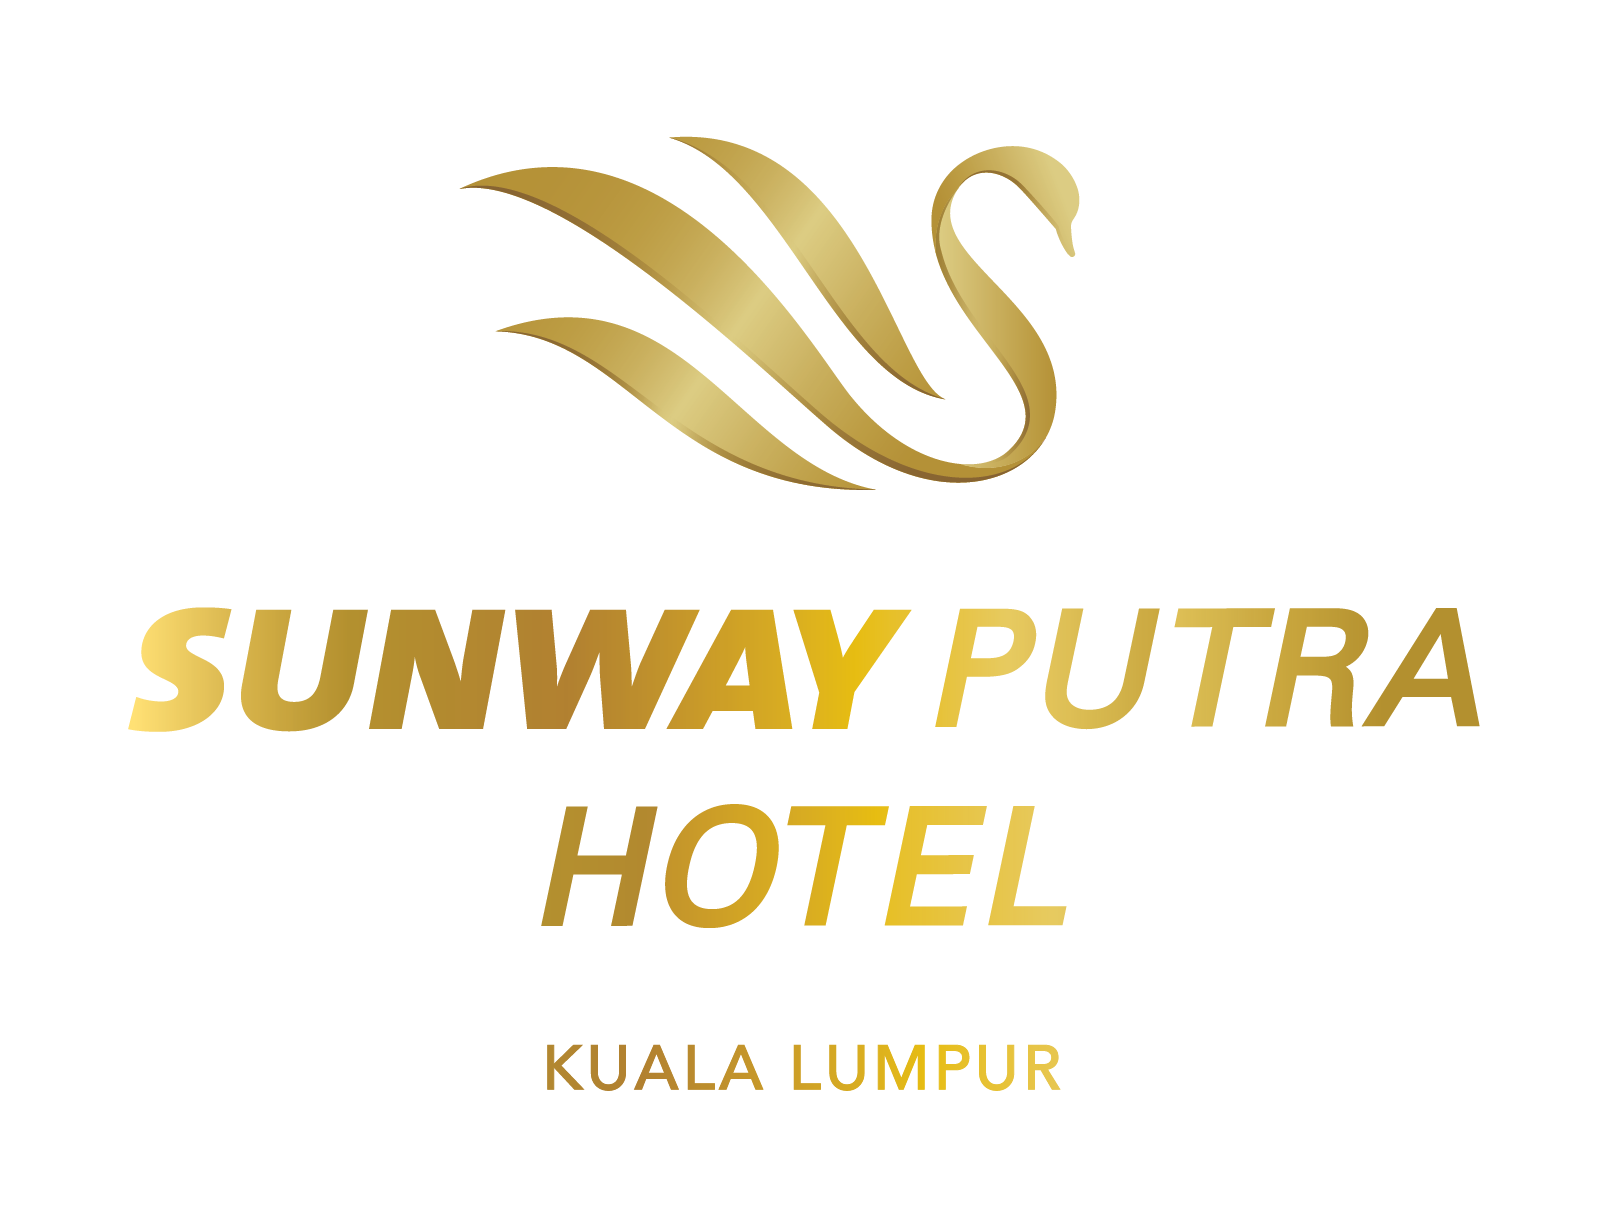 The Official Logo of Sunway Putra Hotel Kuala Lumpur